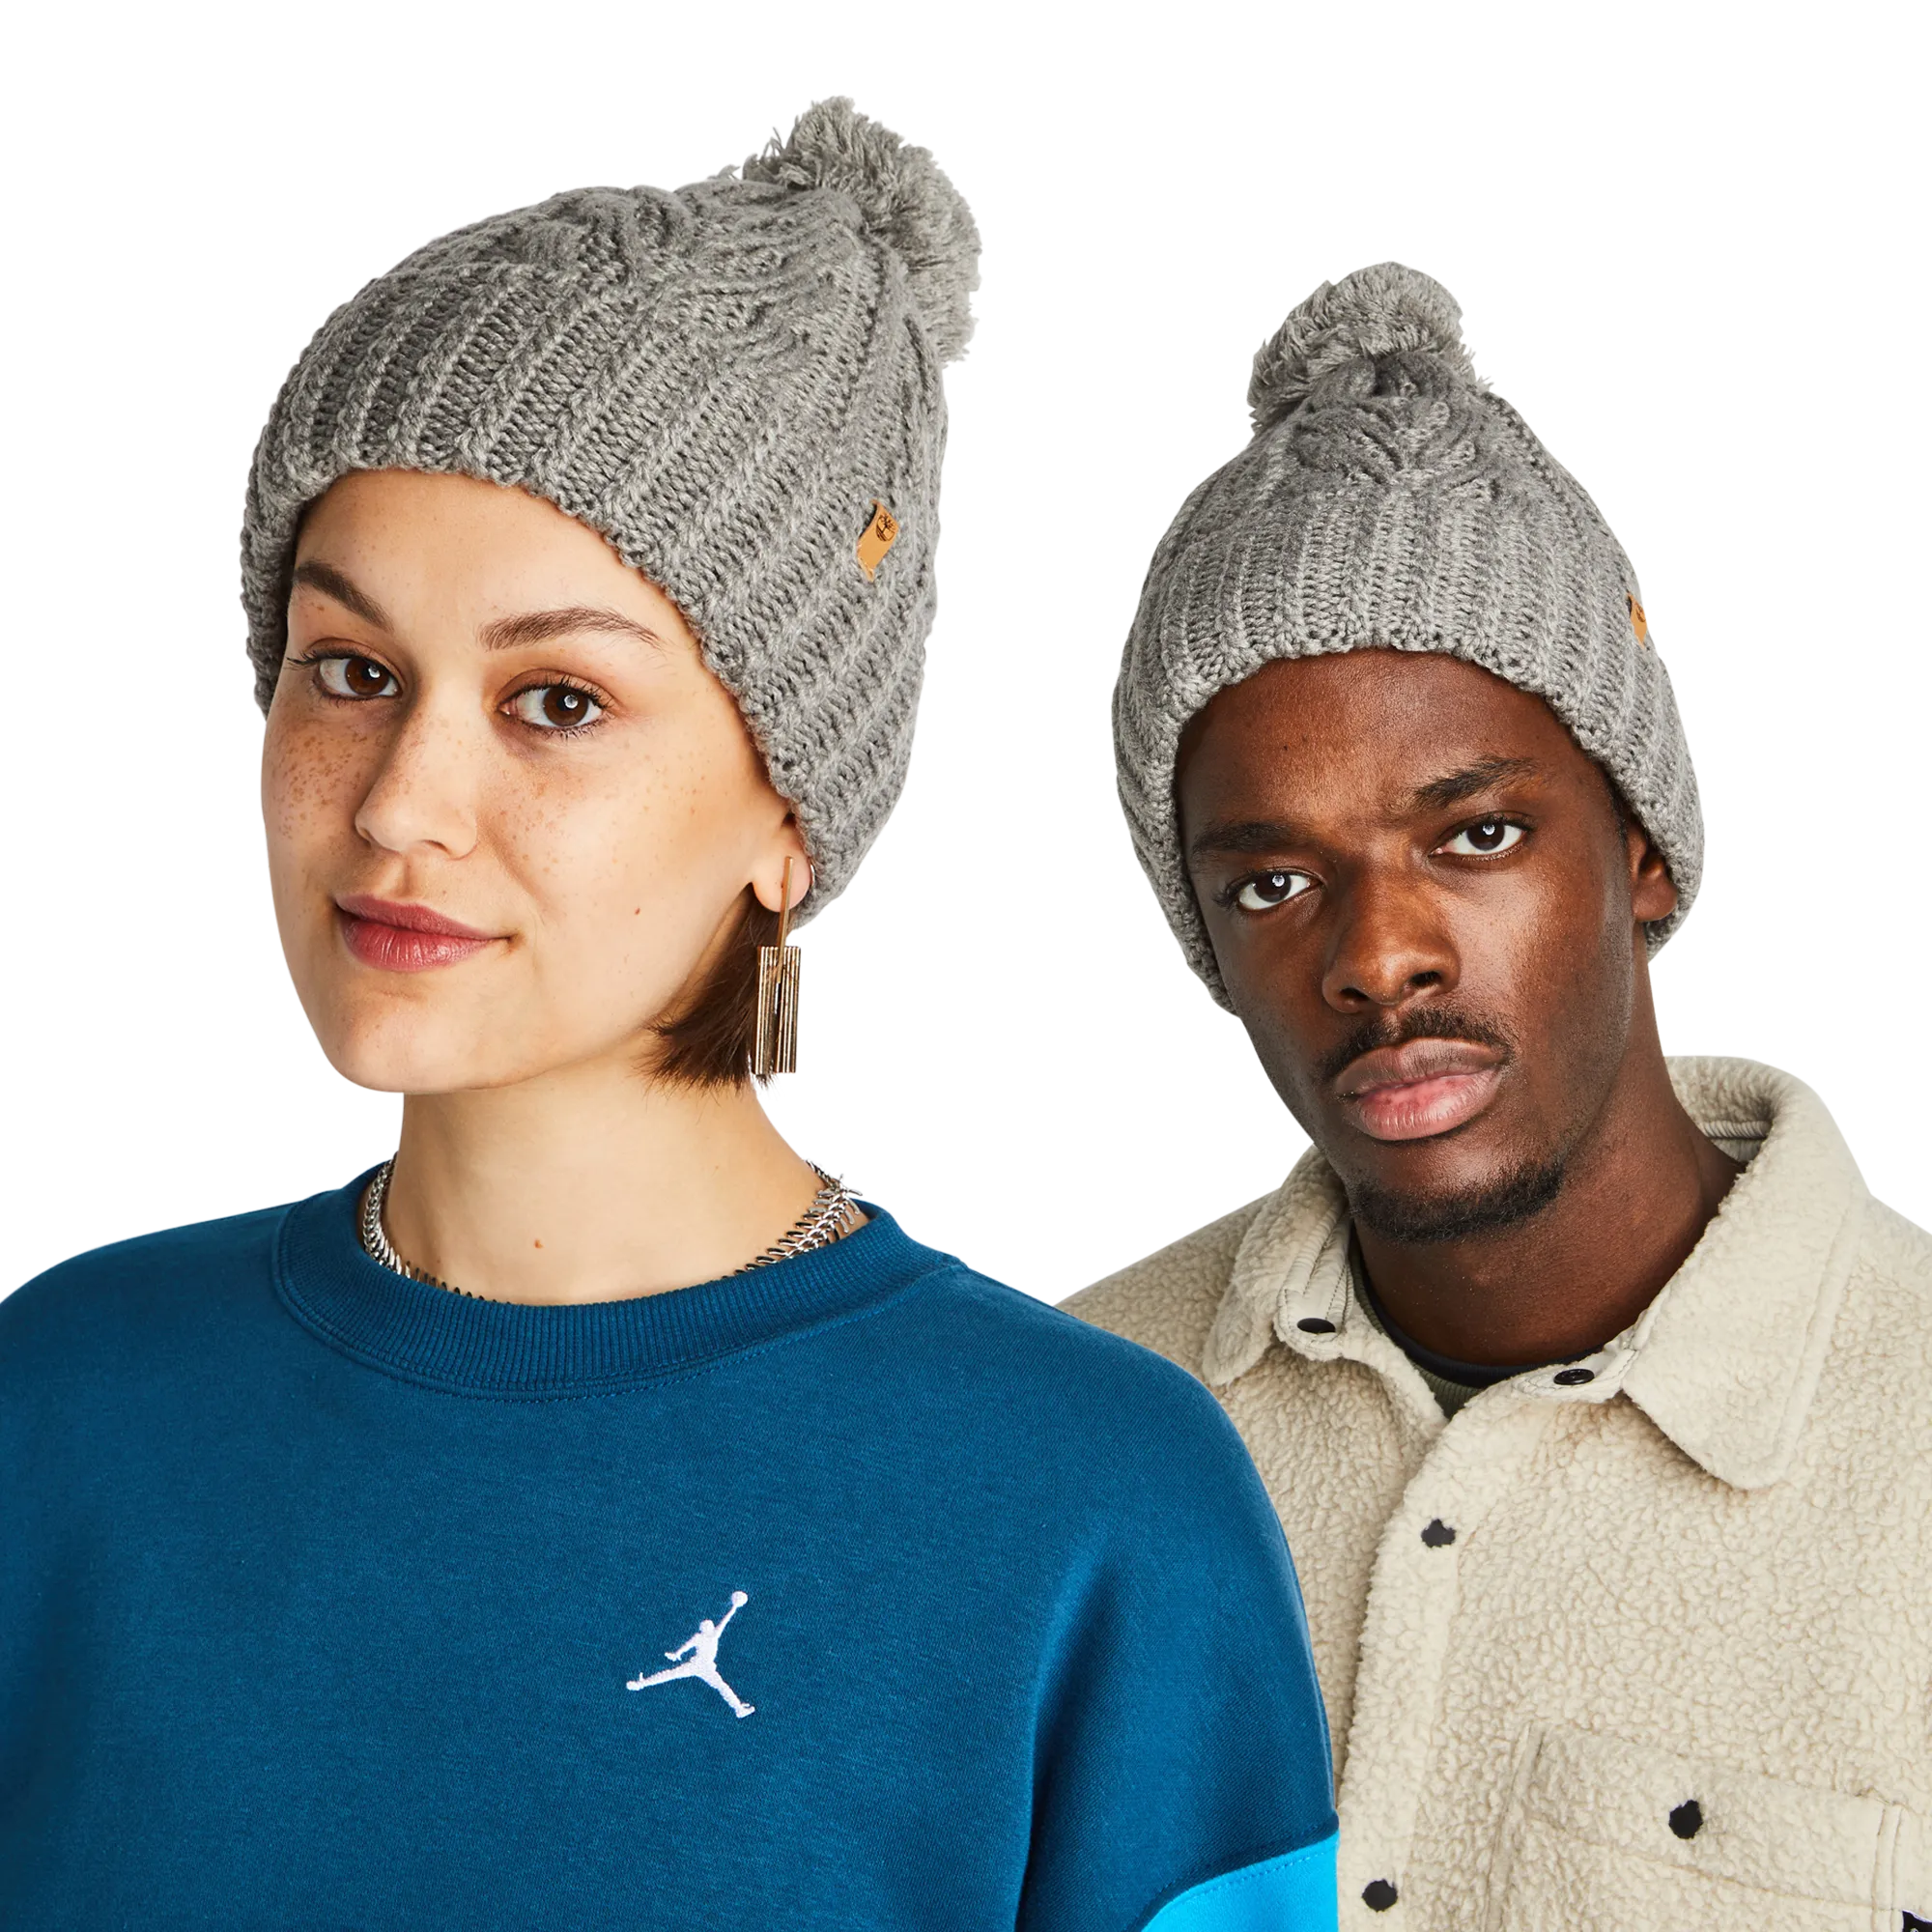  Logo - Unisex Knitted Hats & Beanies